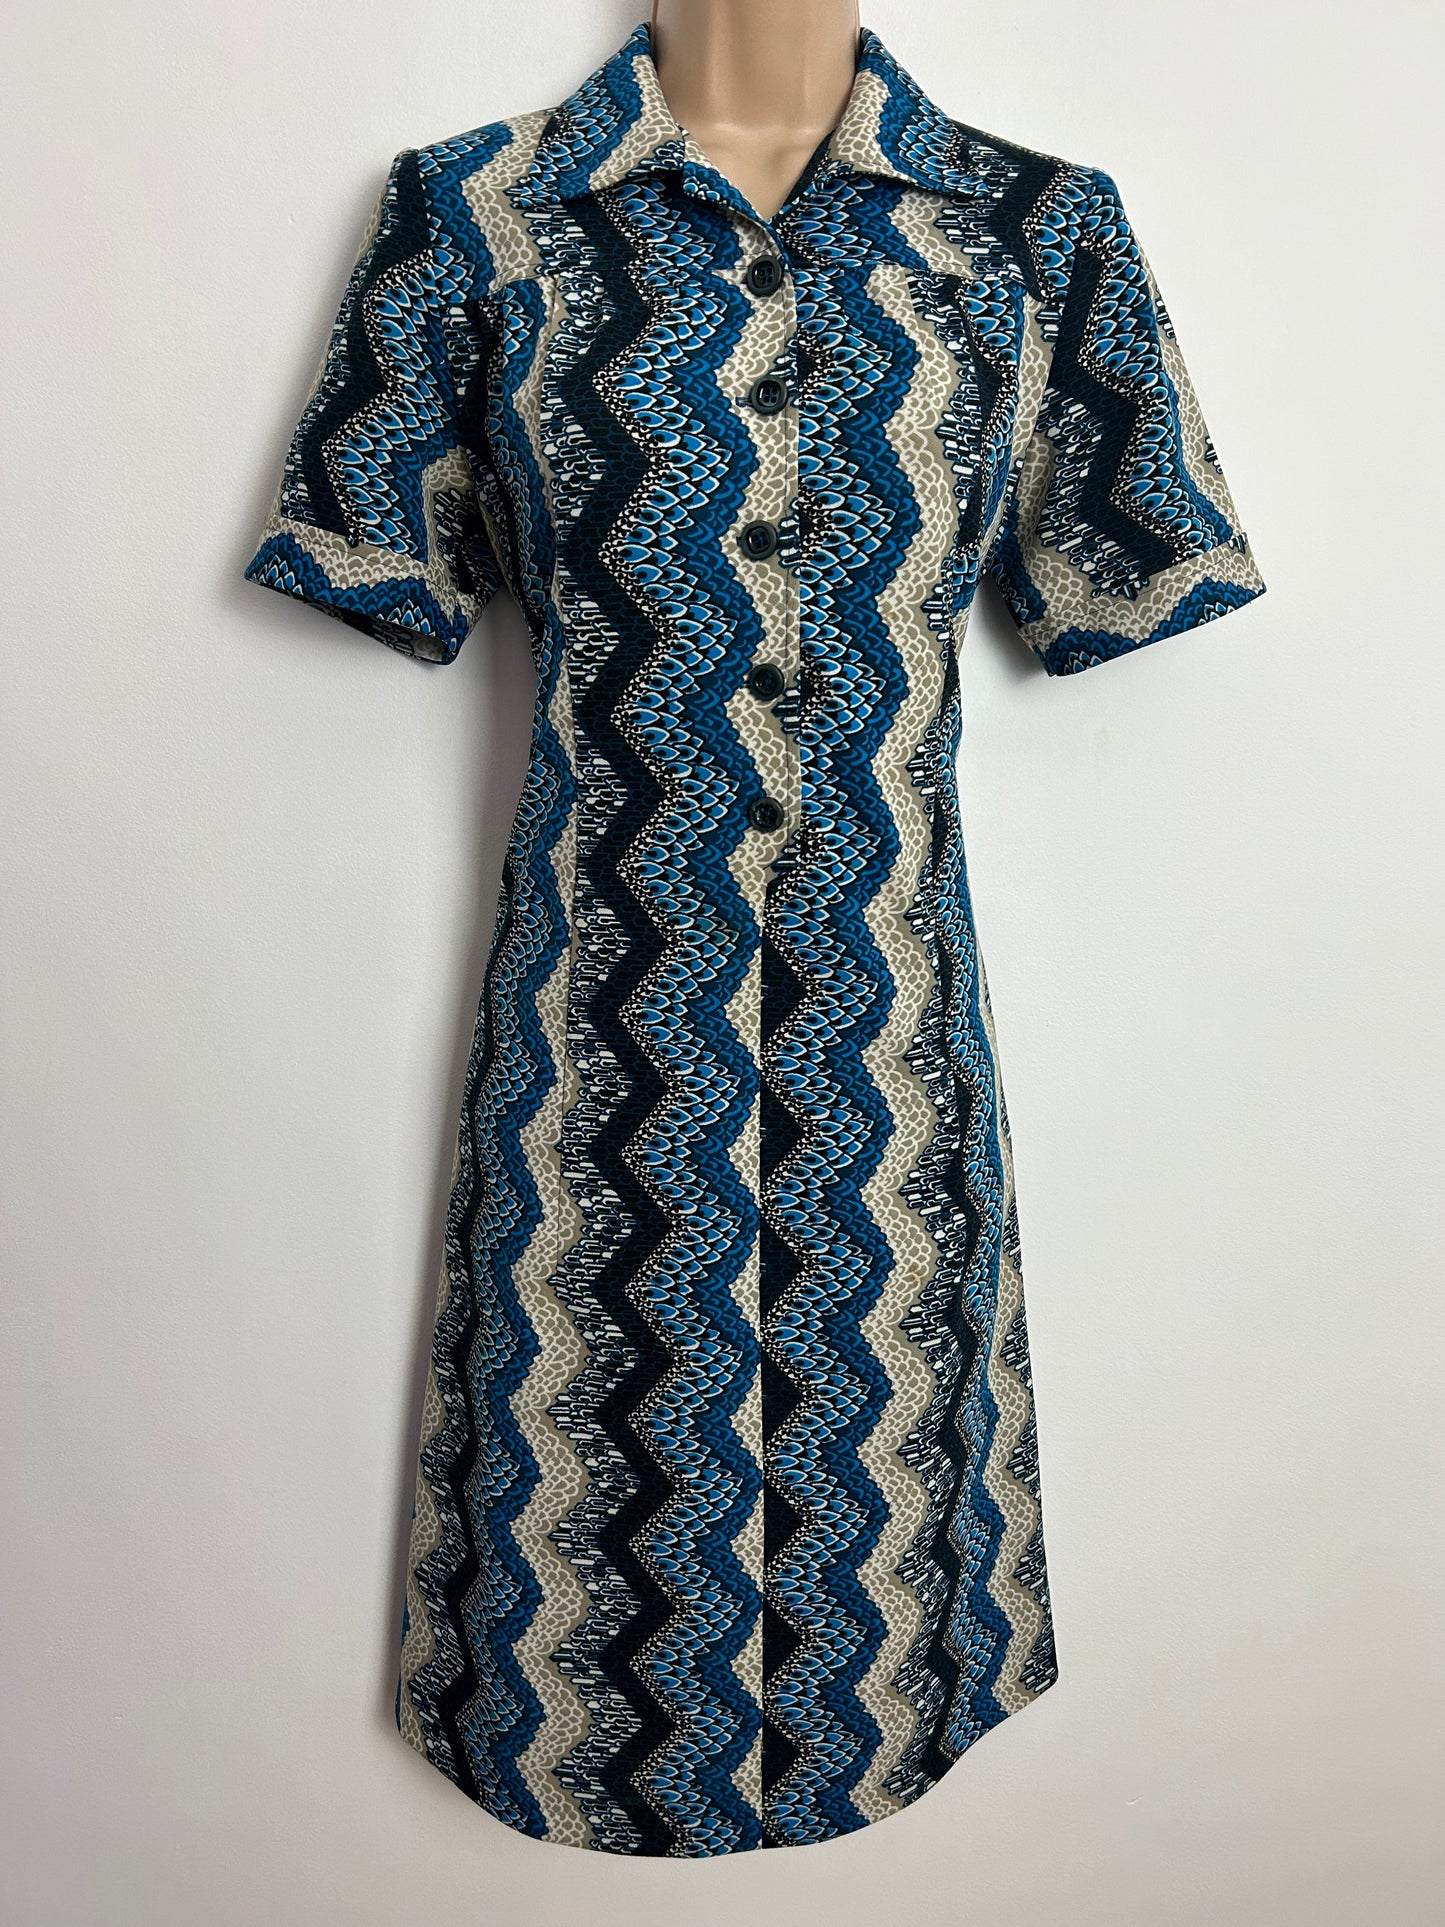 Vintage 1970s UK Size 12 Blue & Beige Abstract Petal Print Short Sleeve Mod Shift Dress